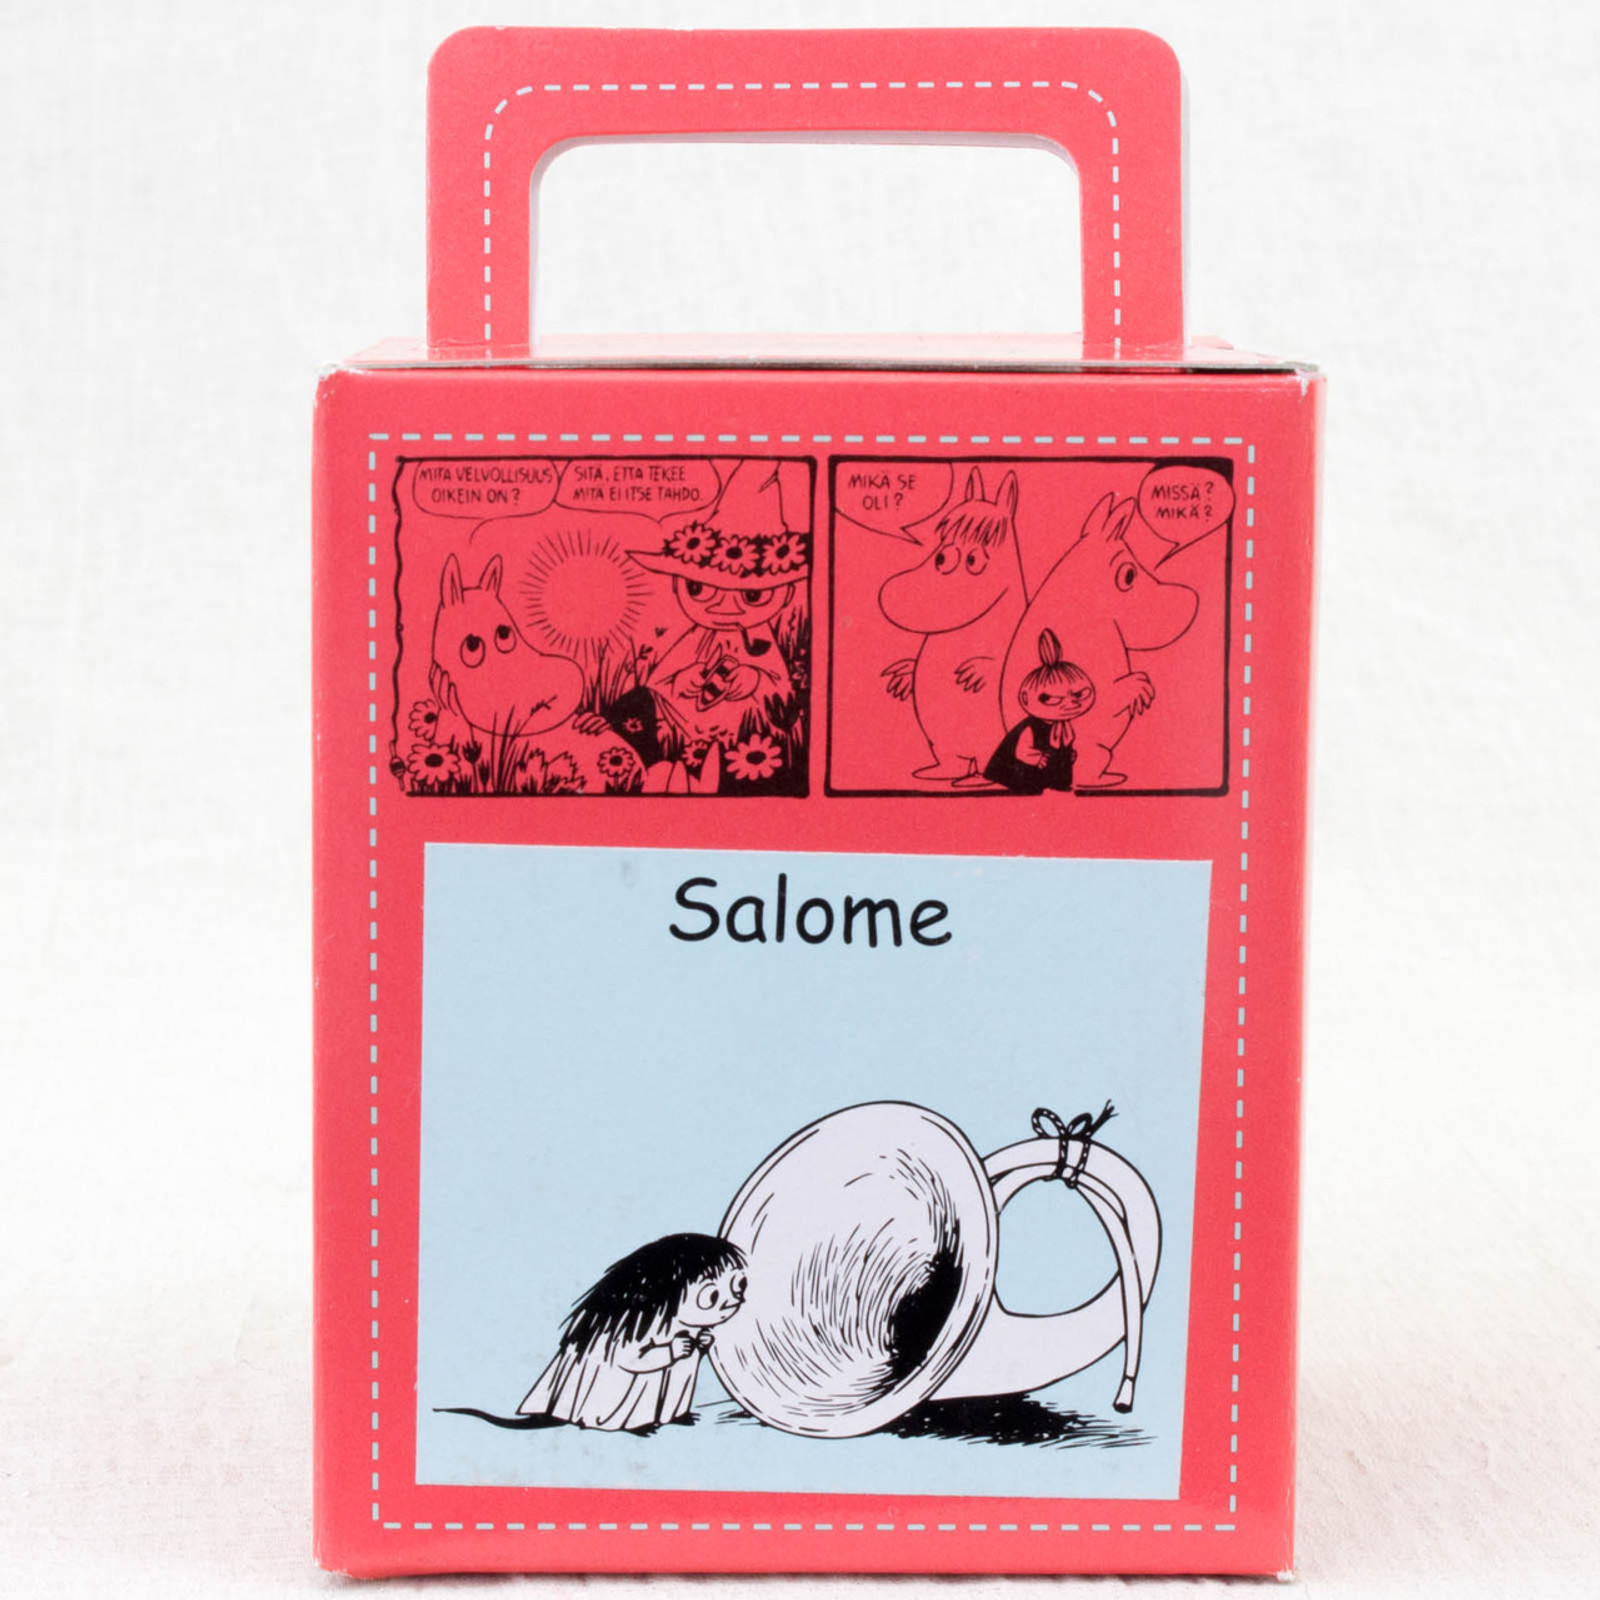 RARE! Moomin Characters Salome Original Comics Ver. Mini Figure Benelic JAPAN